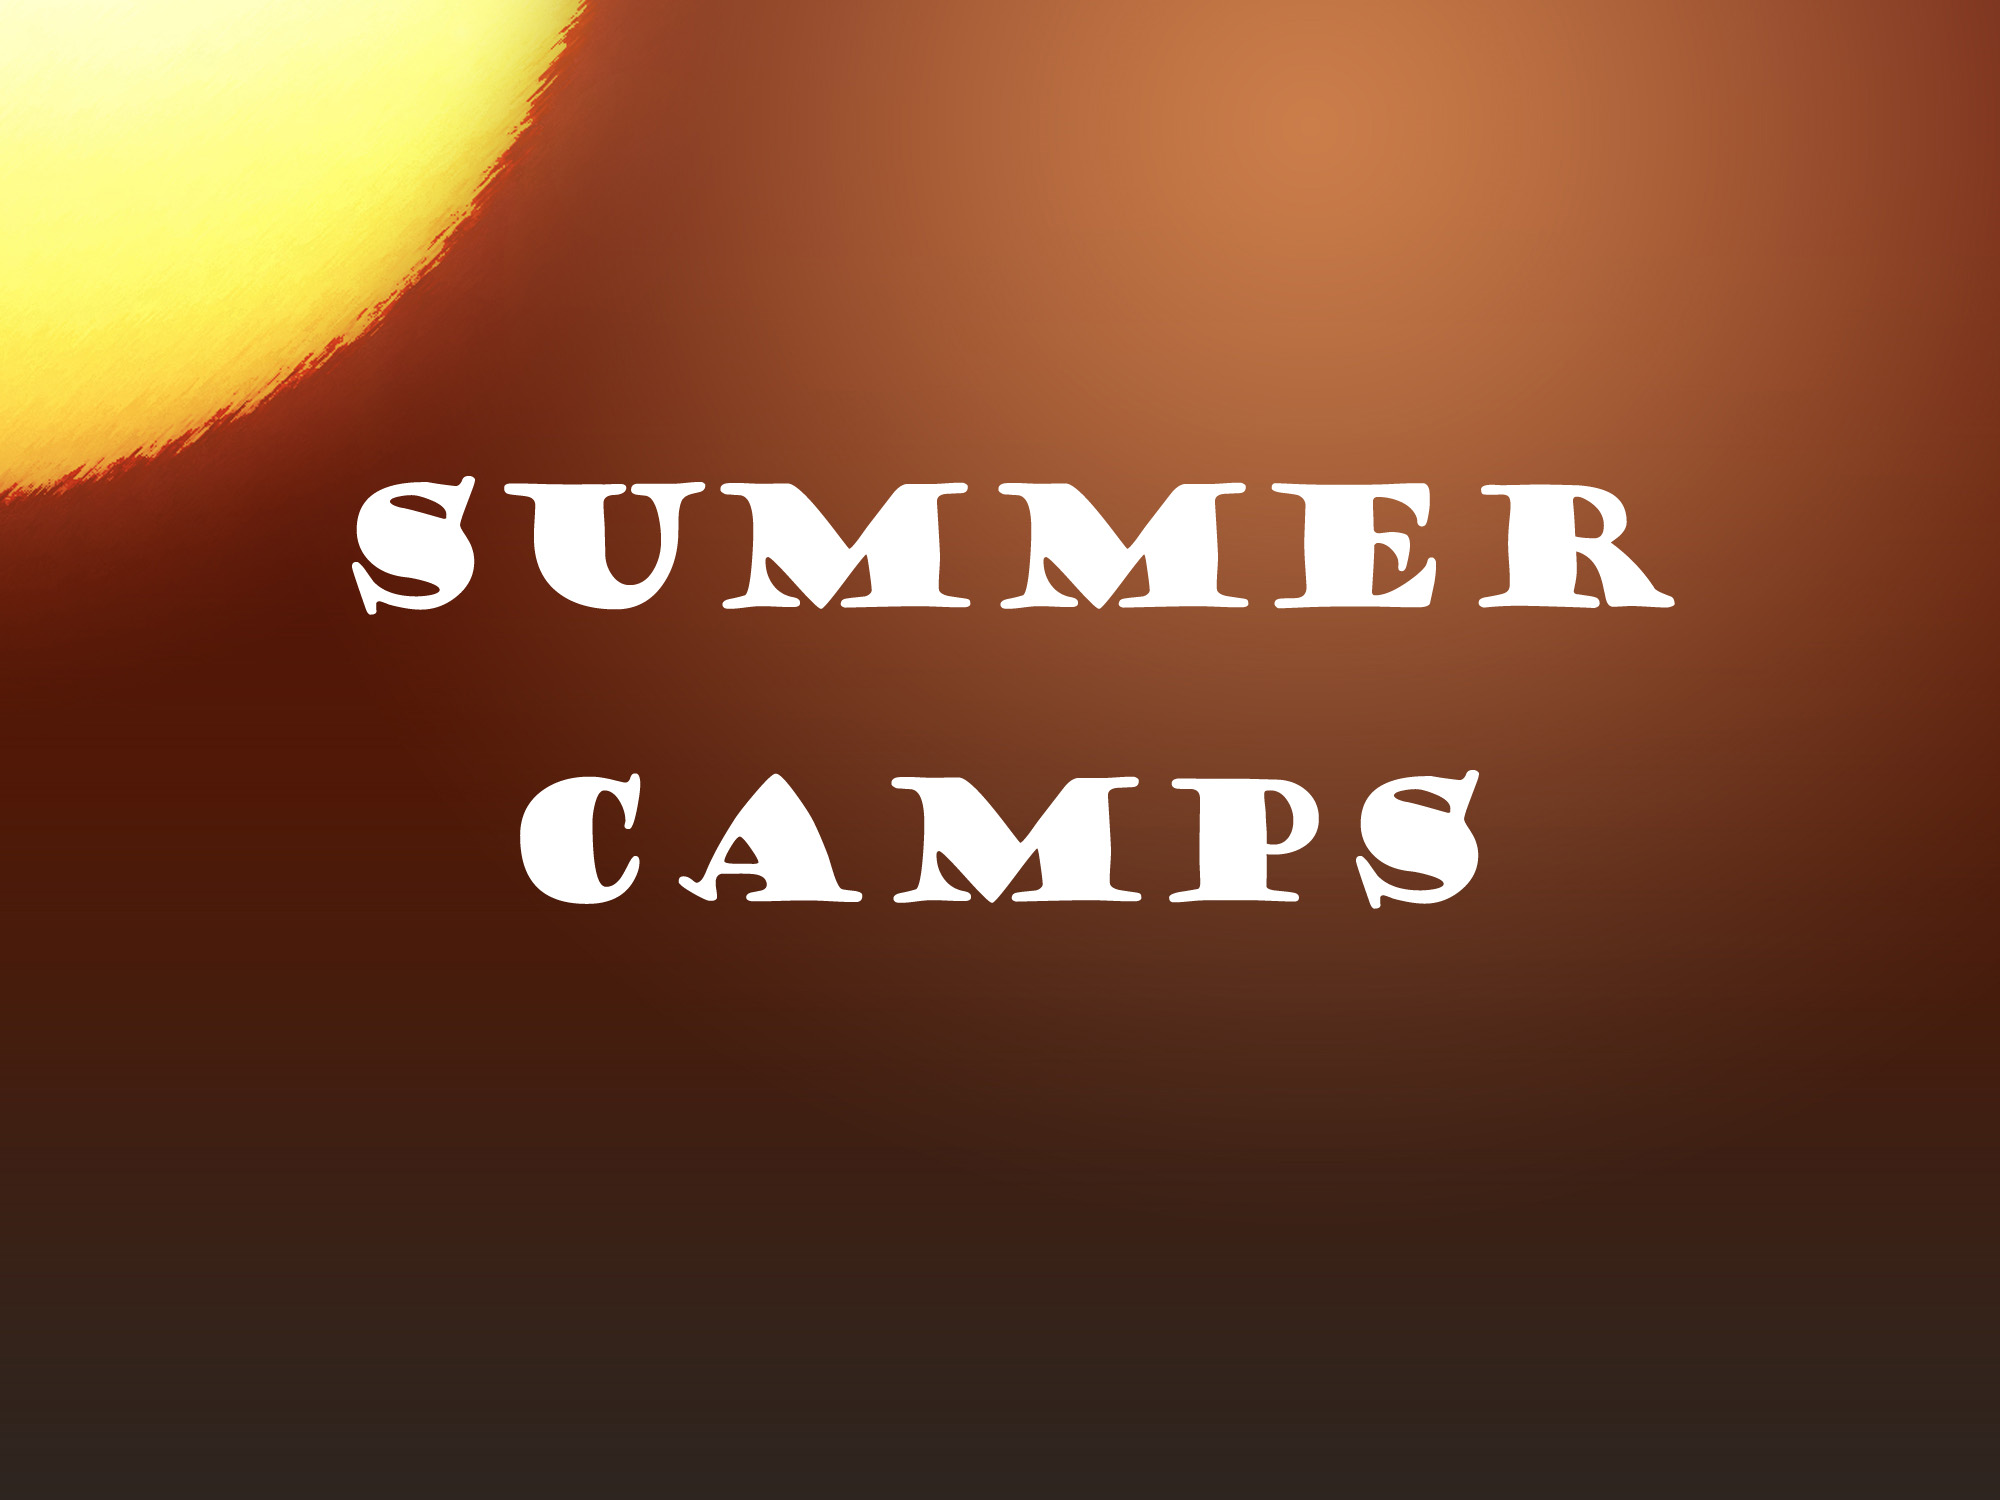 City of Columbia Summer Camp Registration Underway